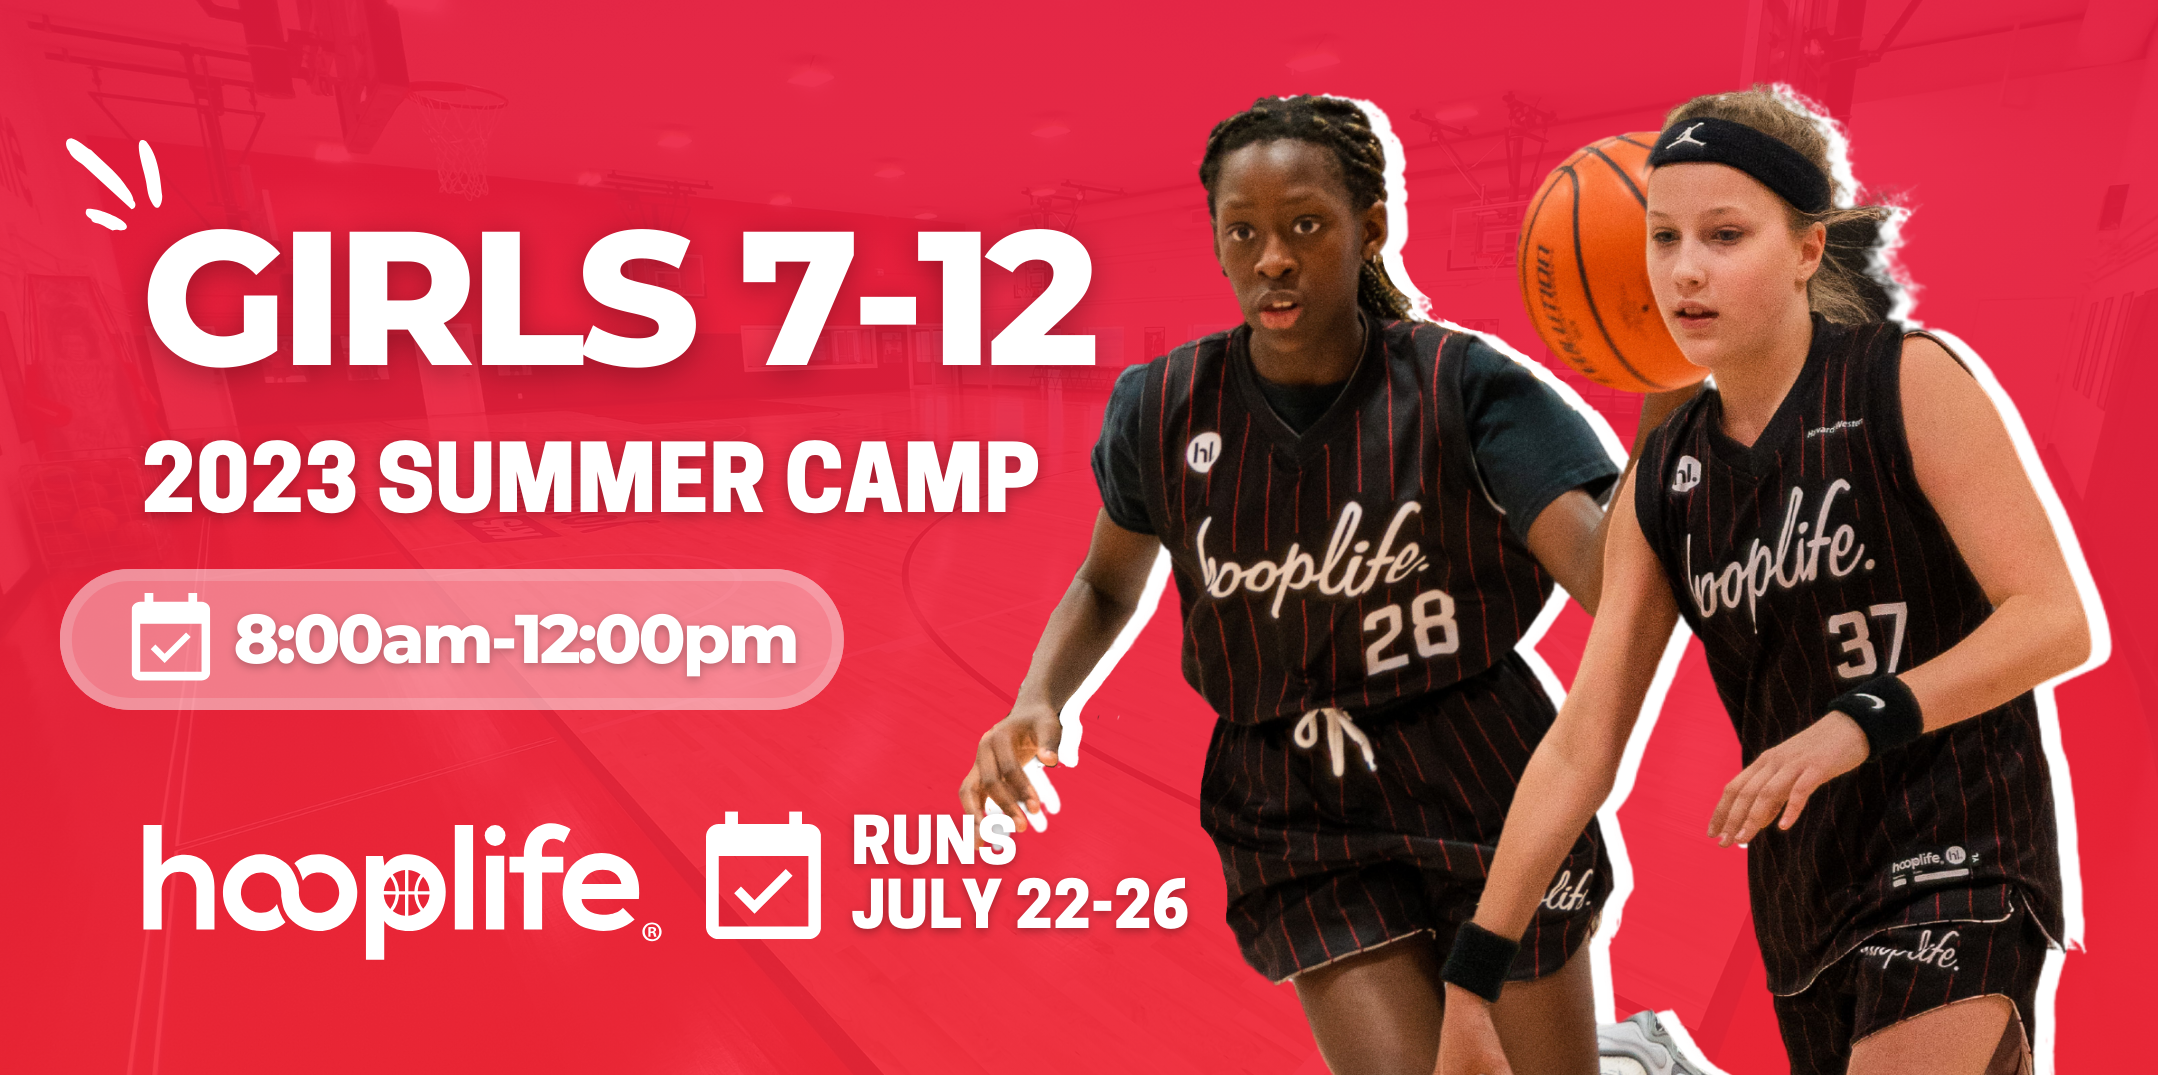 Girls 7-12 Summer Camp | July 22-26